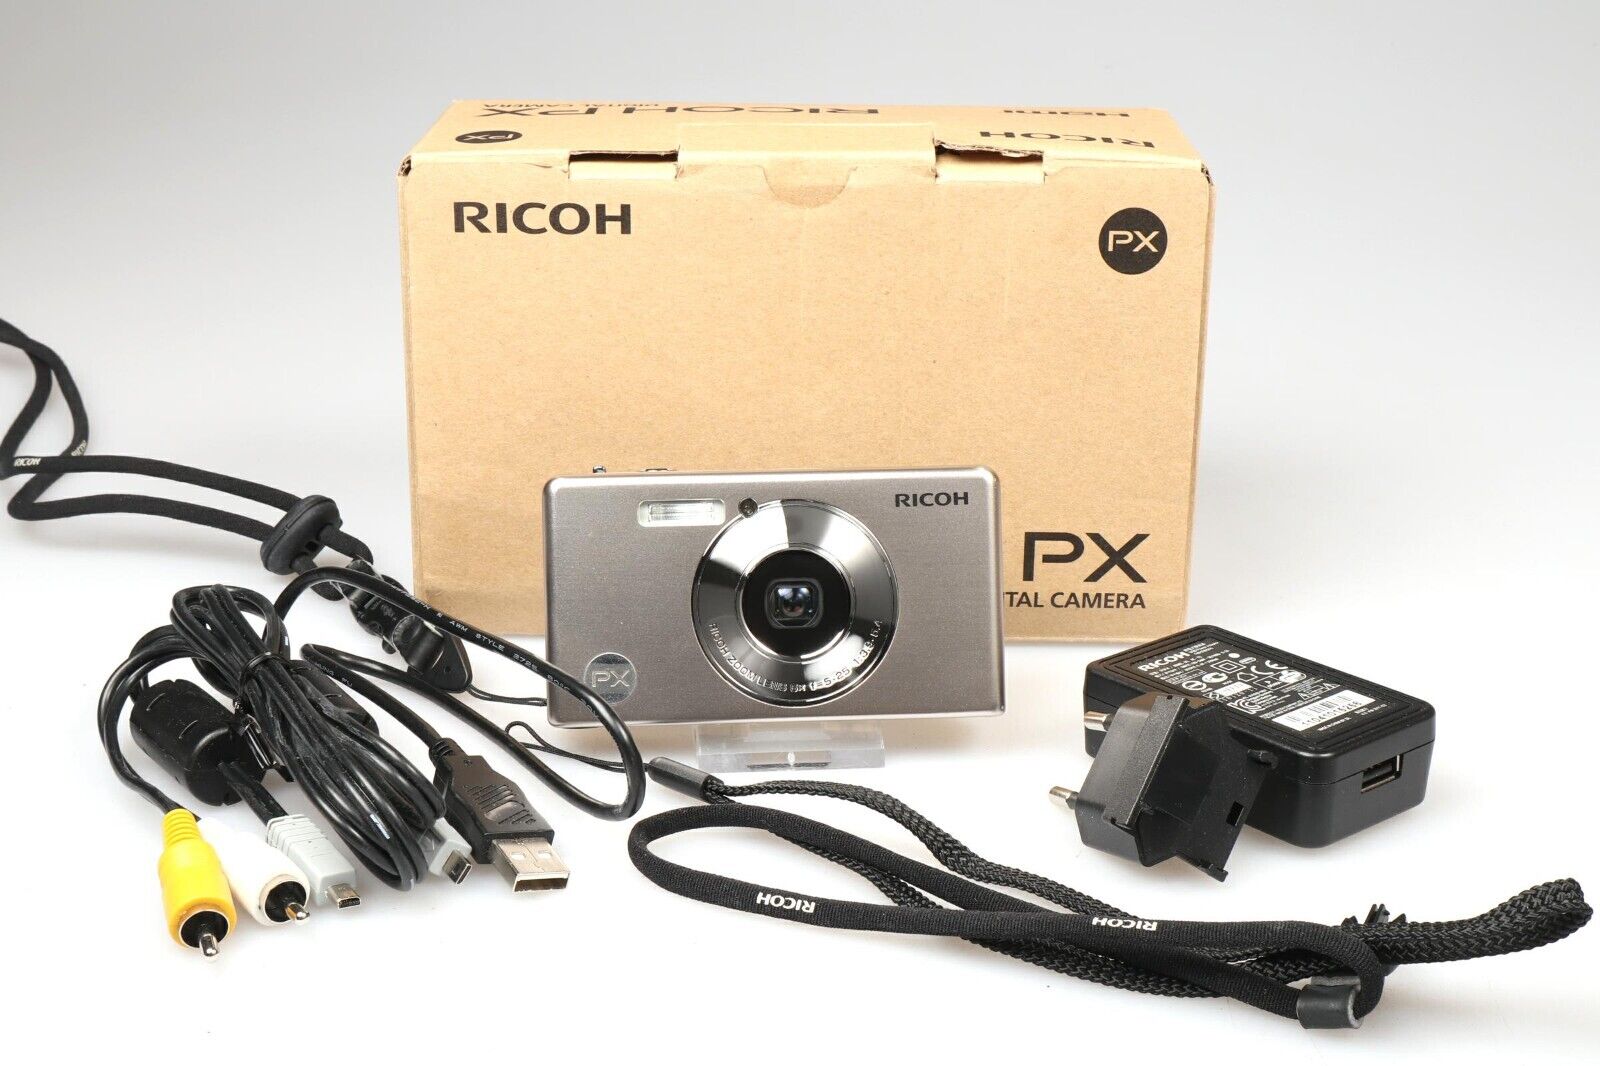 Ricoh Px | Digital Compact Camera | 16MP | Champagne Silver ...